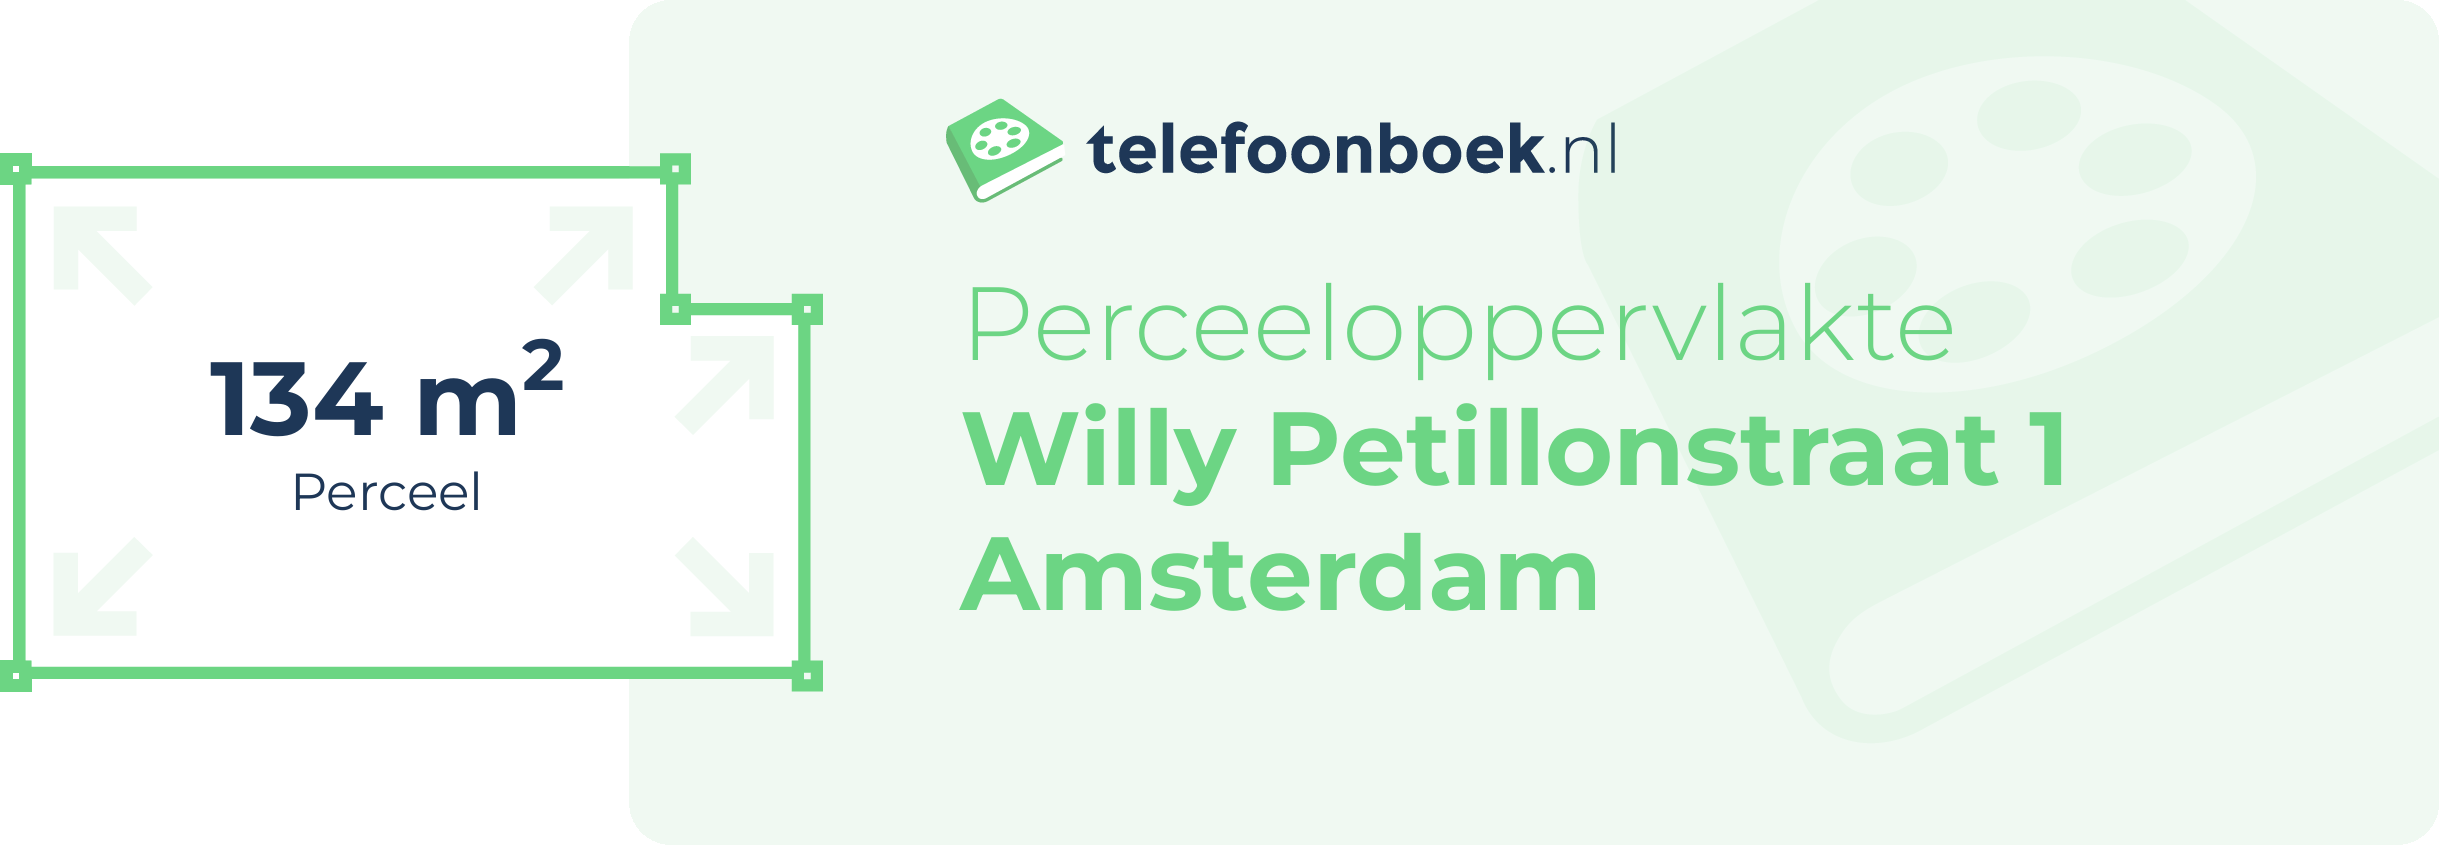 Perceeloppervlakte Willy Petillonstraat 1 Amsterdam